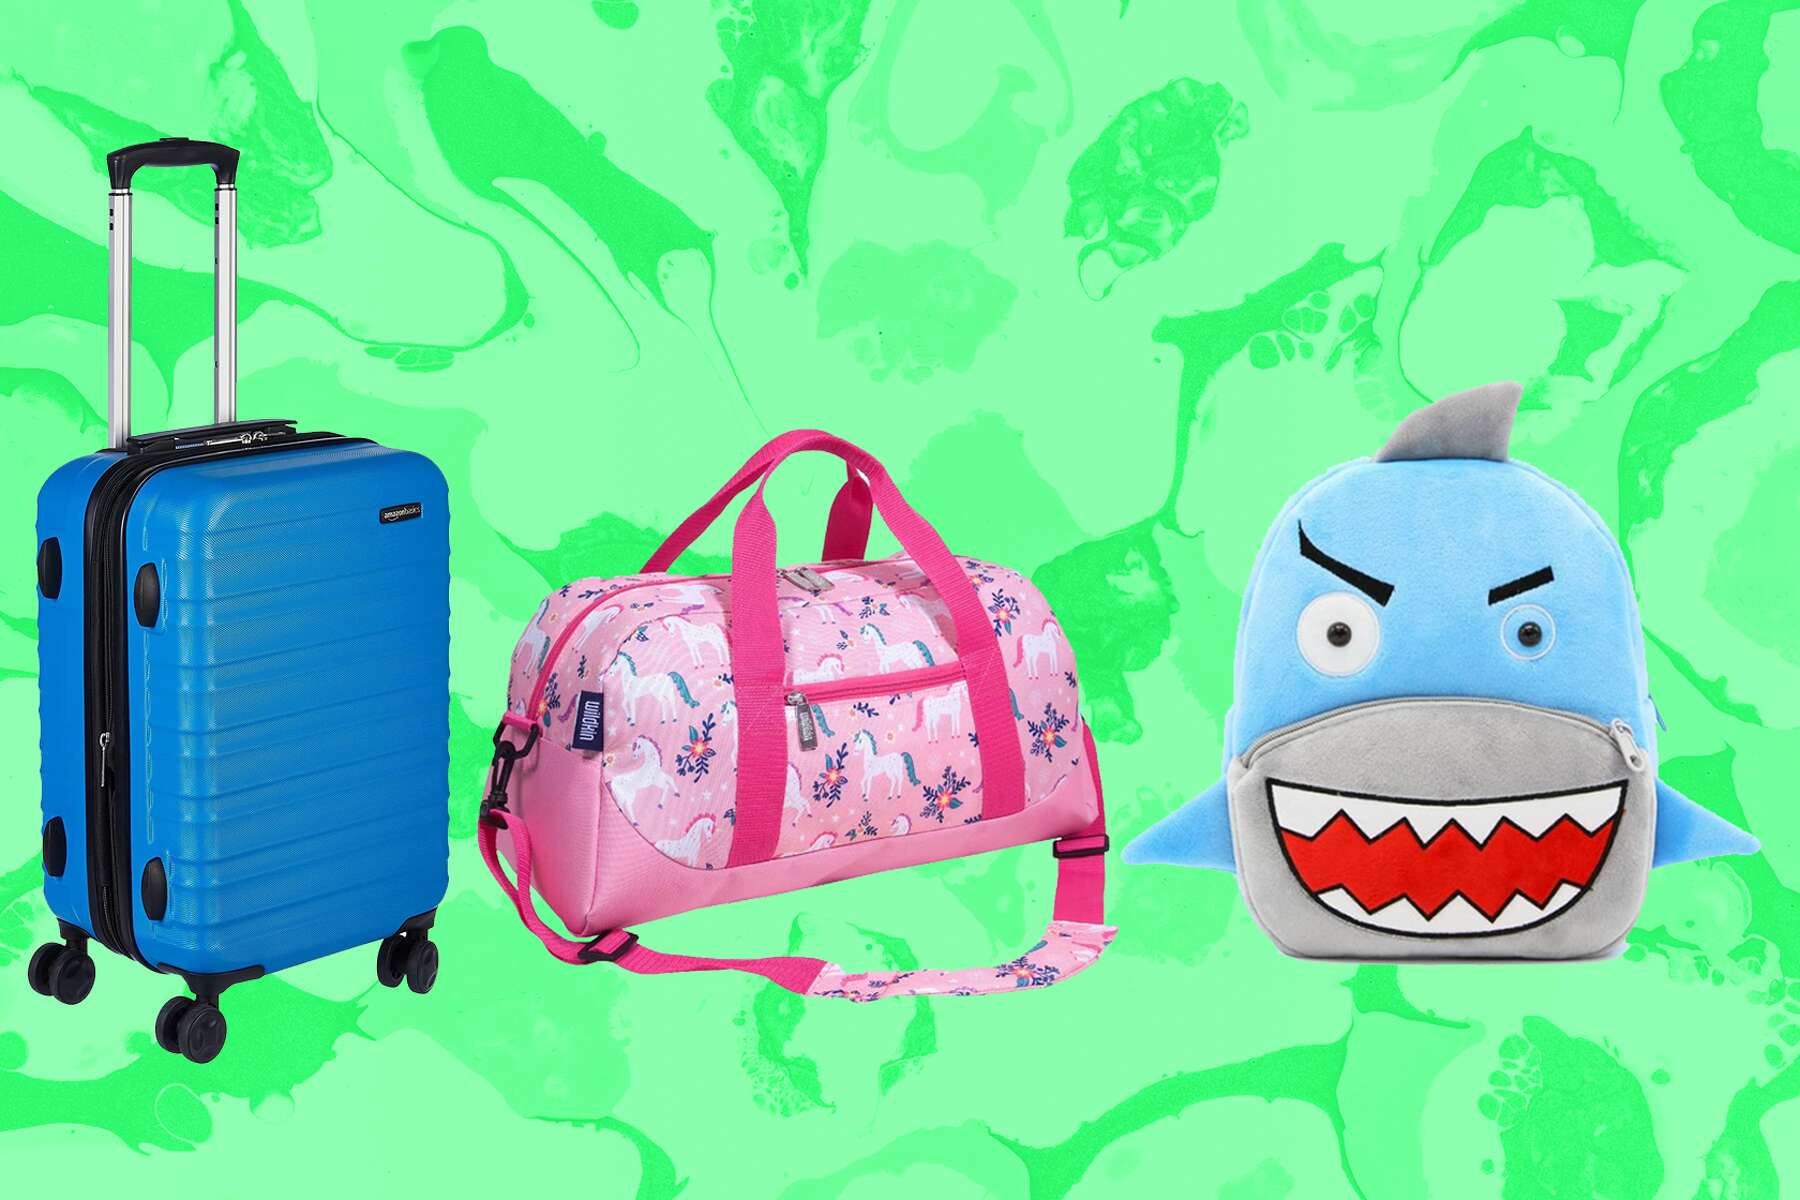 NEW Travel cartoon mini school bag Kids Wheel Bag Trolley Cabin Suitcase Case